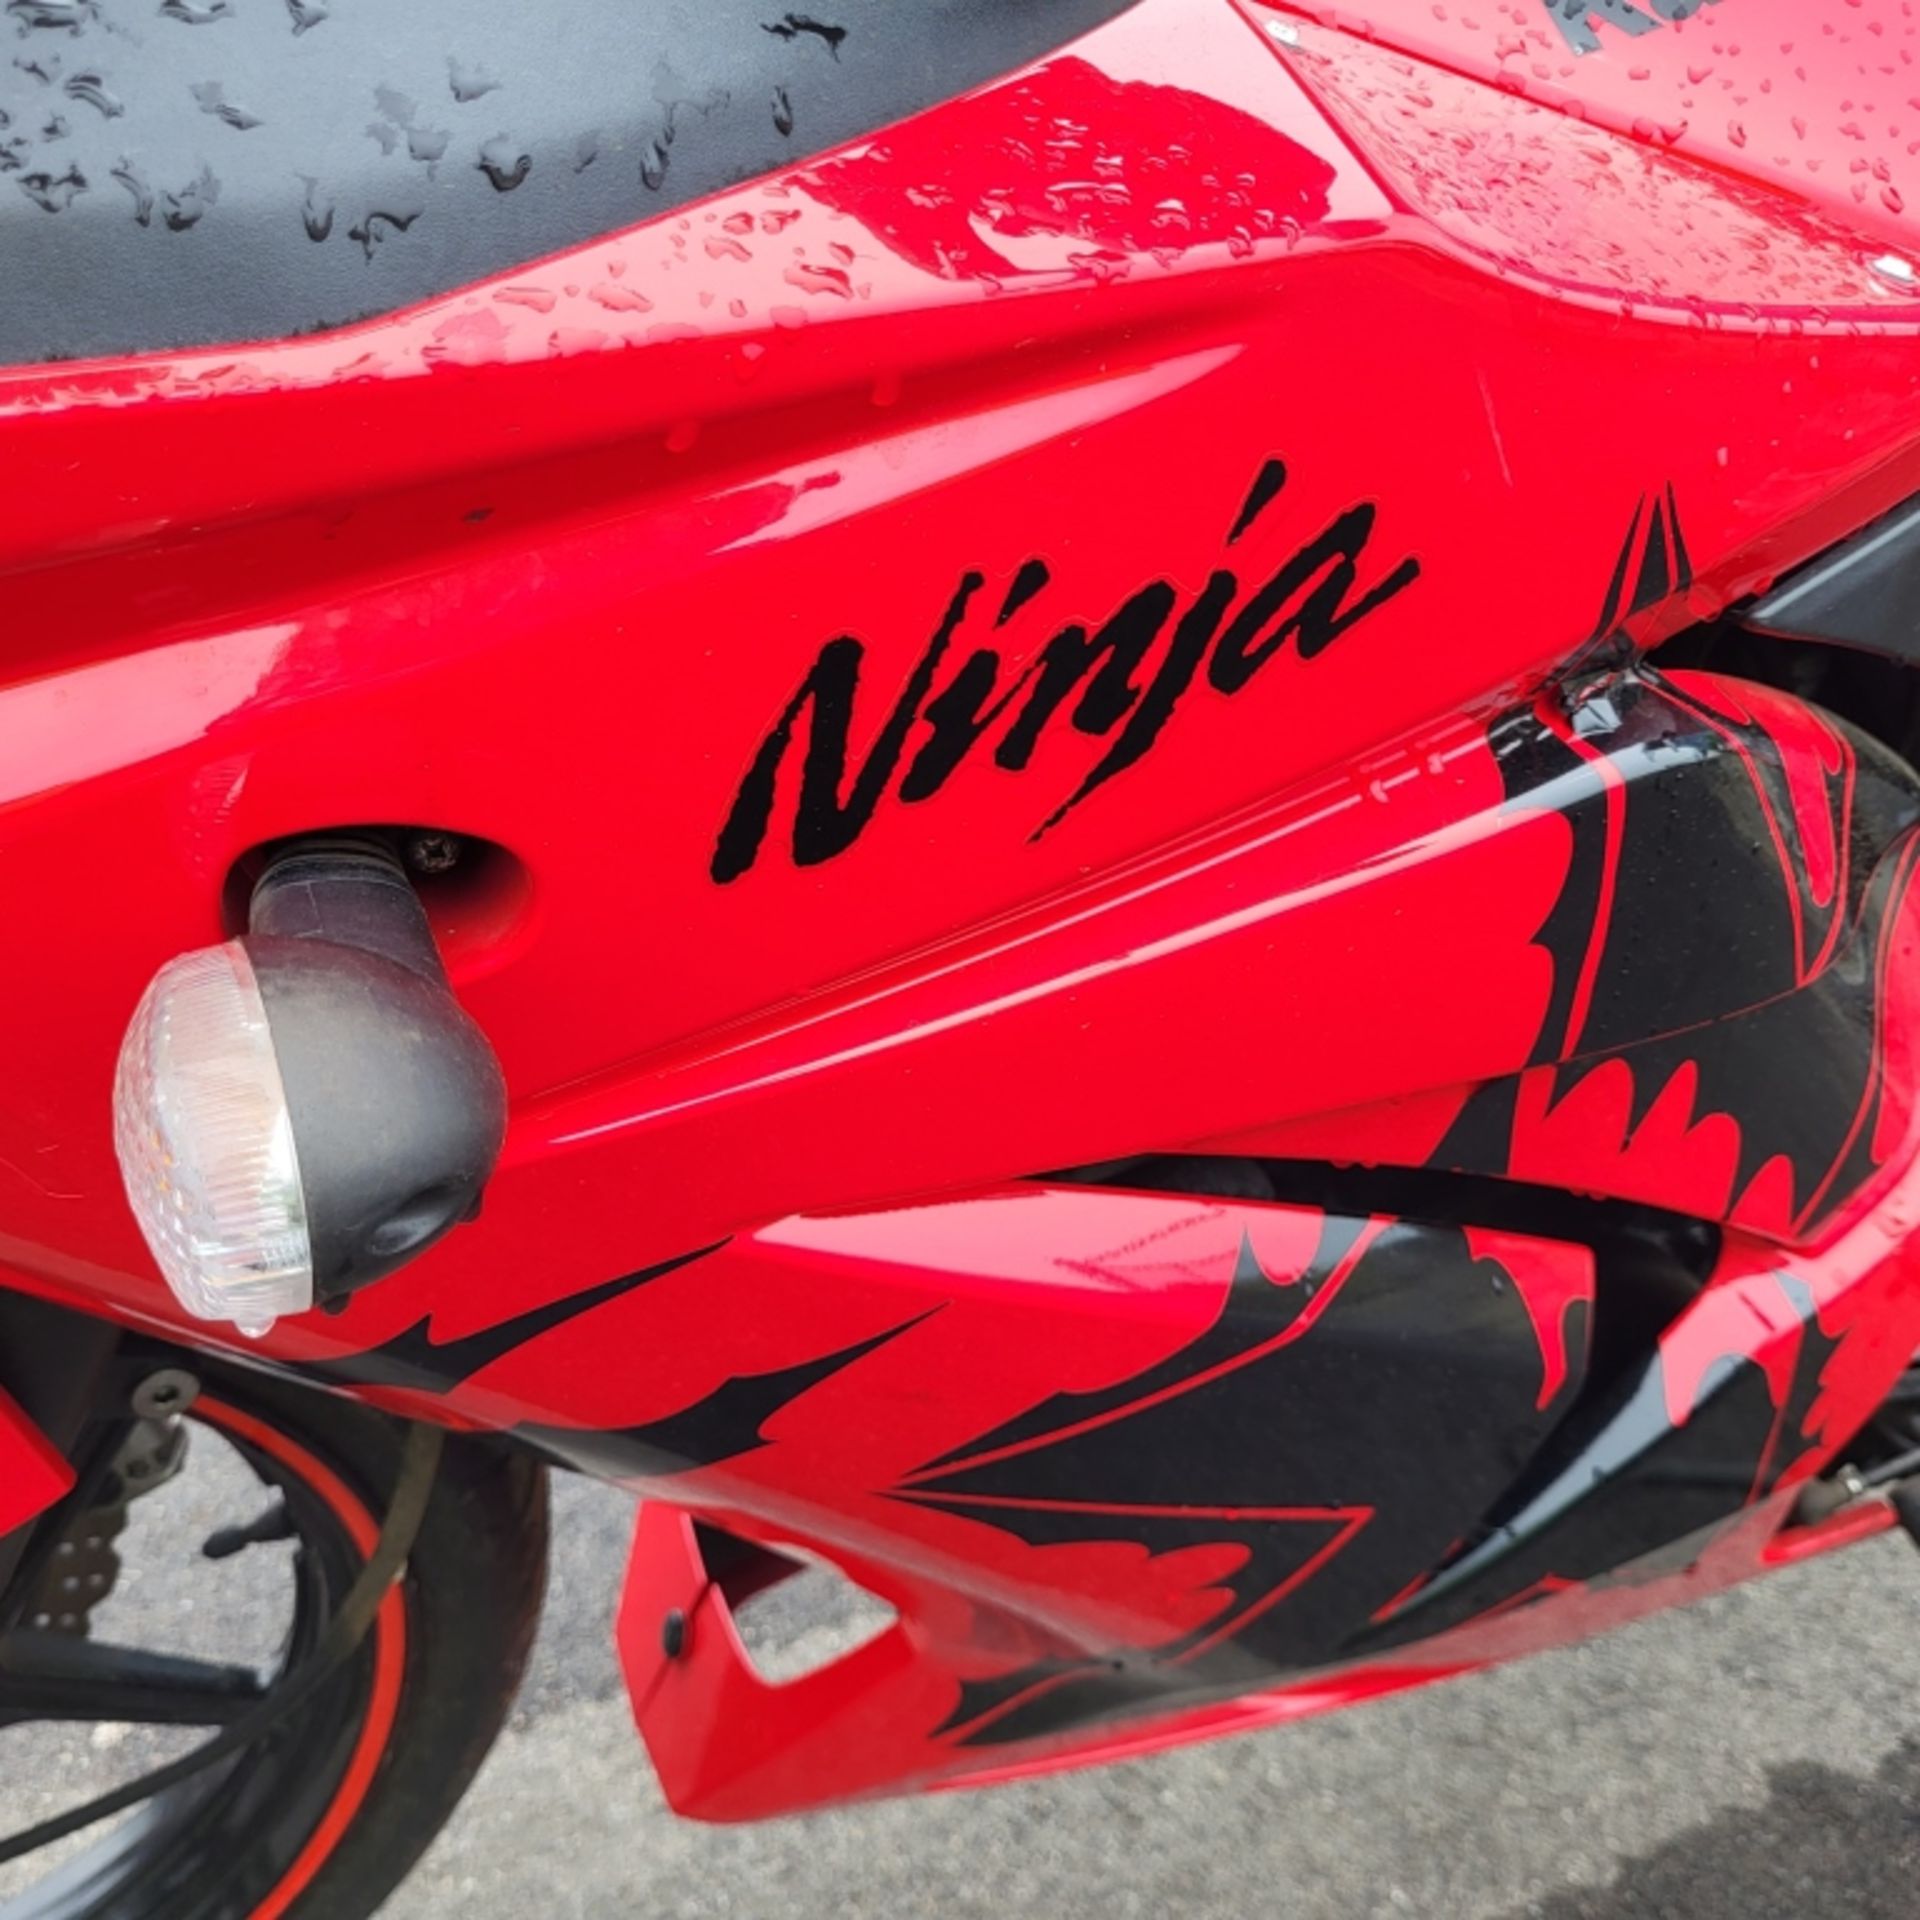 2010 Kawasaki Ninja 250r Motorcycle - Image 4 of 17